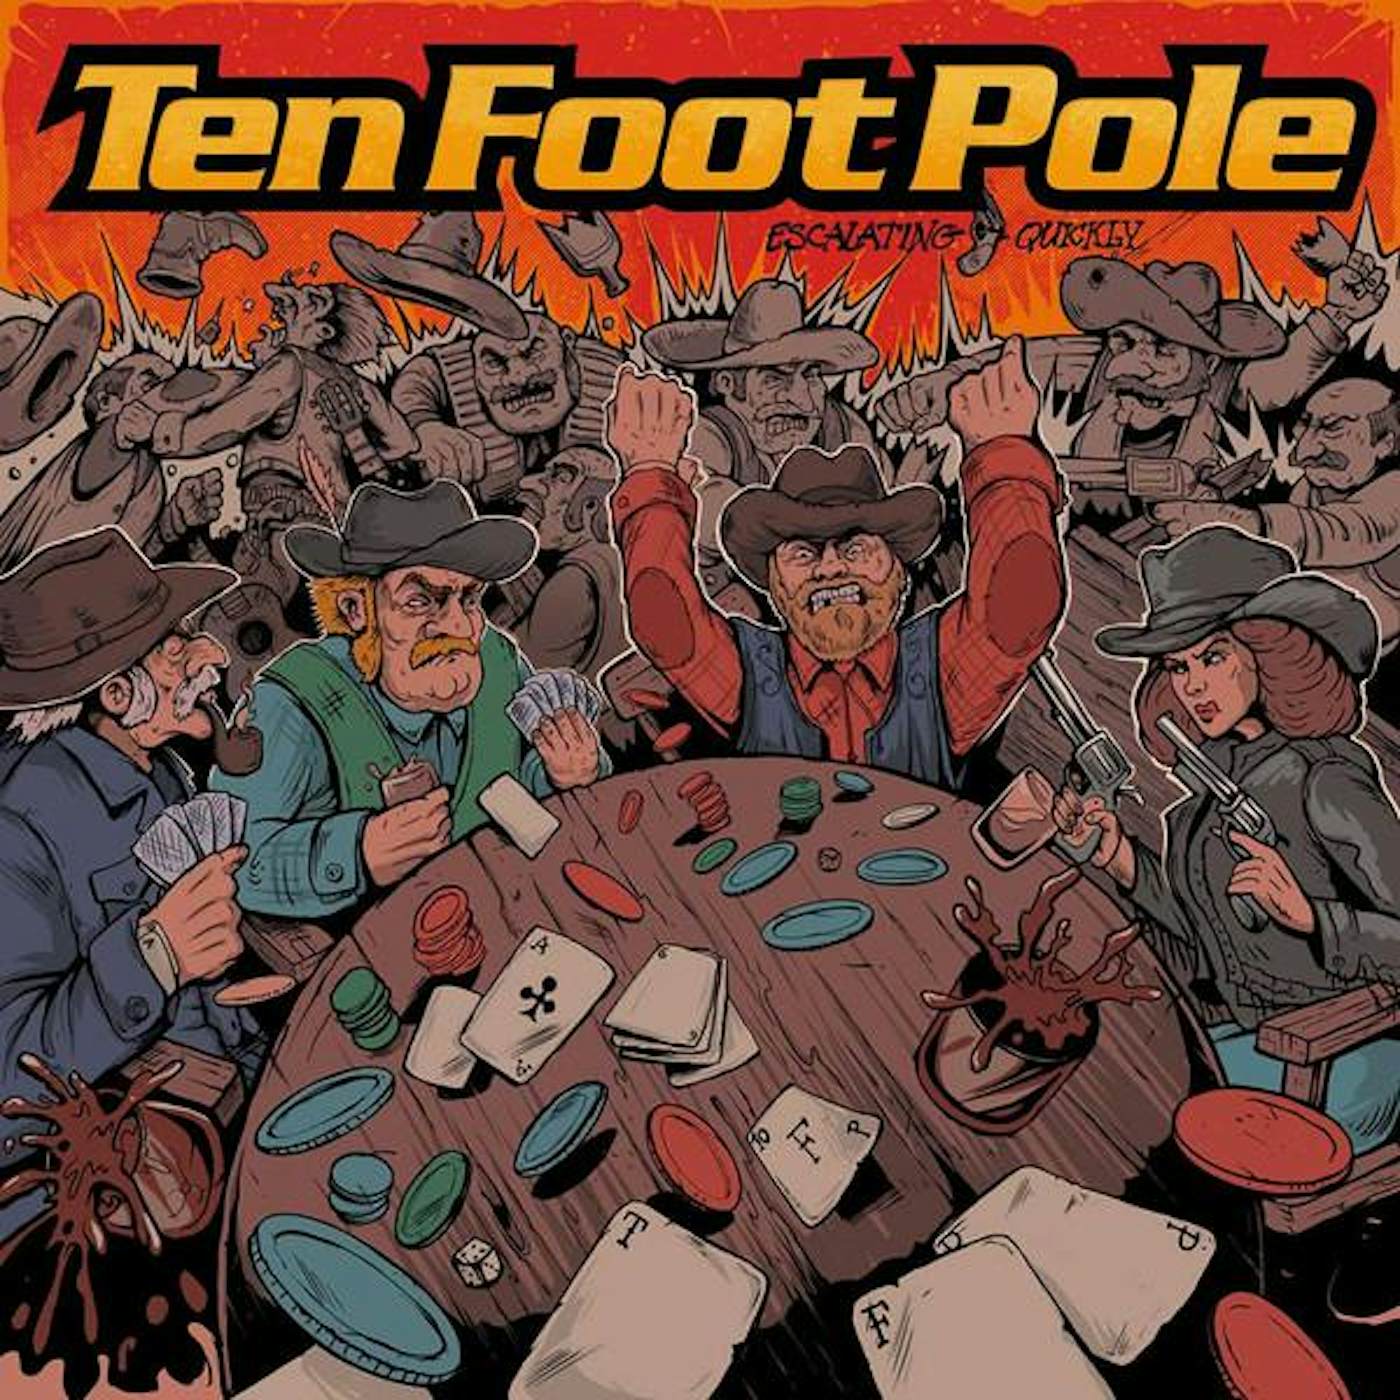 Ten Foot Pole ESCALATING QUICKLY CD - Australia Release